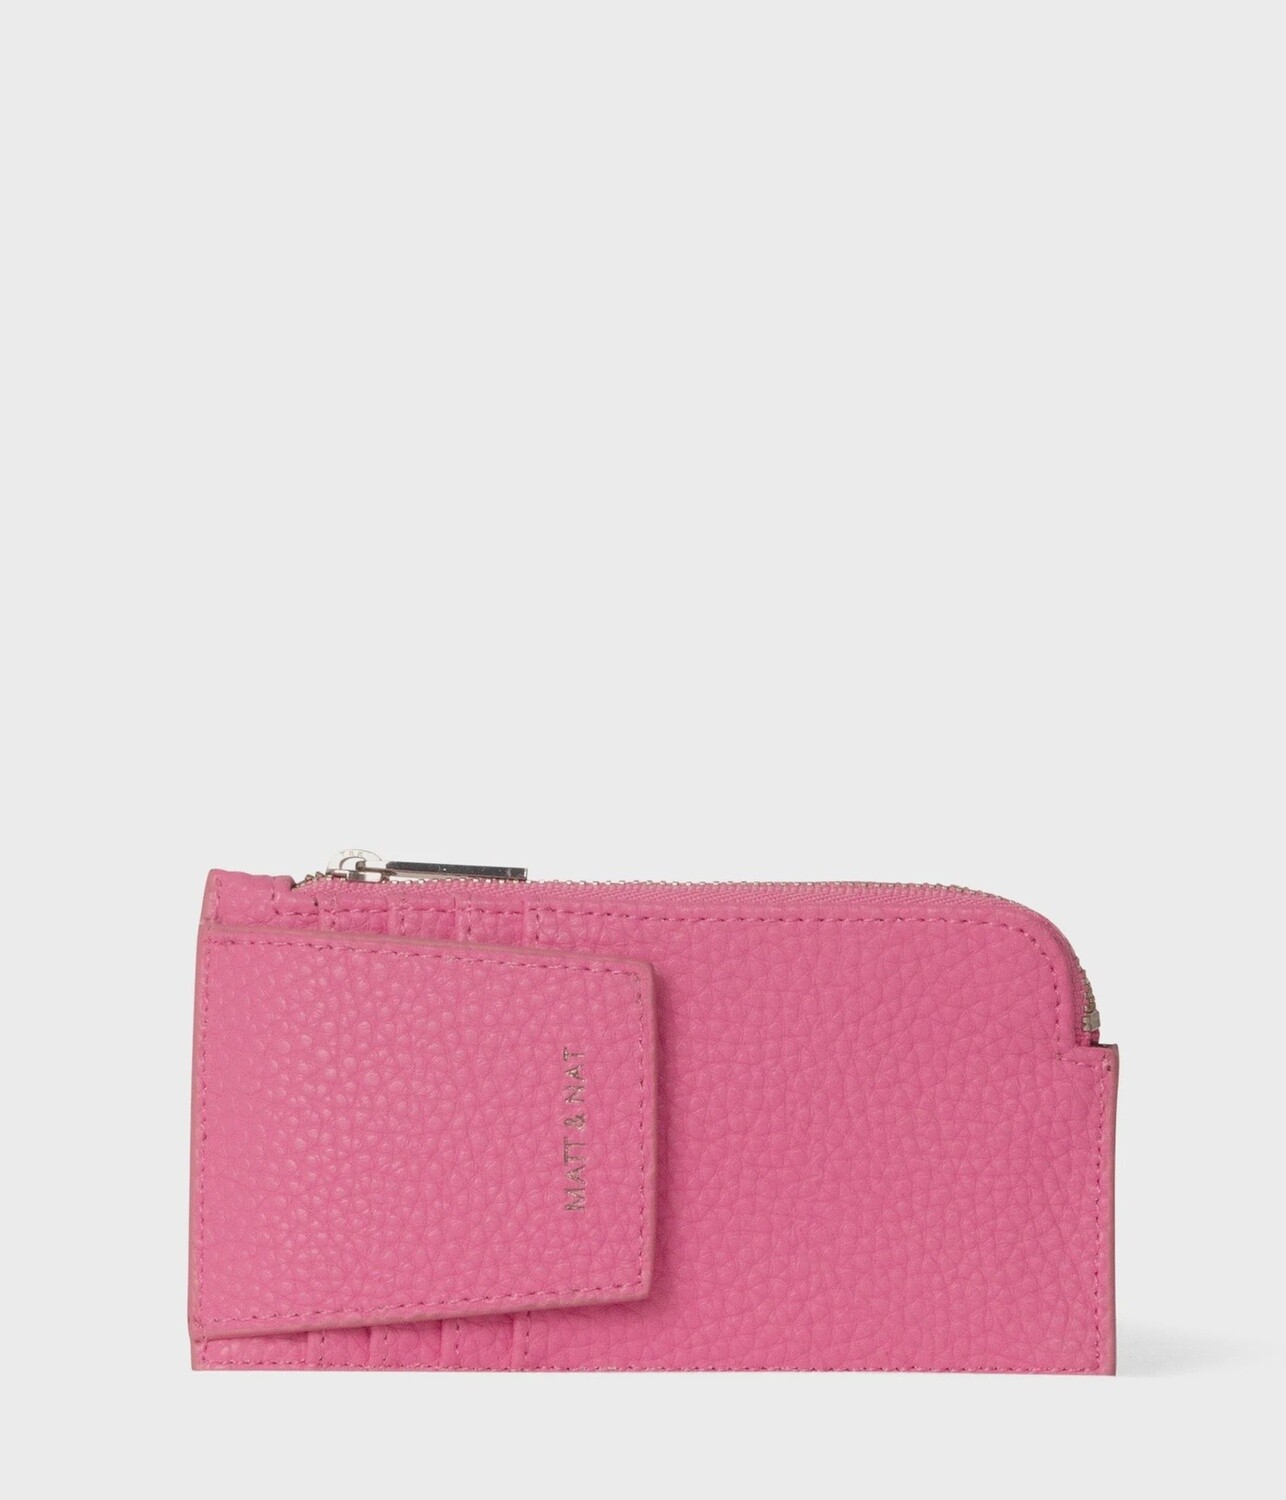 Gratz Wallet, Colour: Rosebud